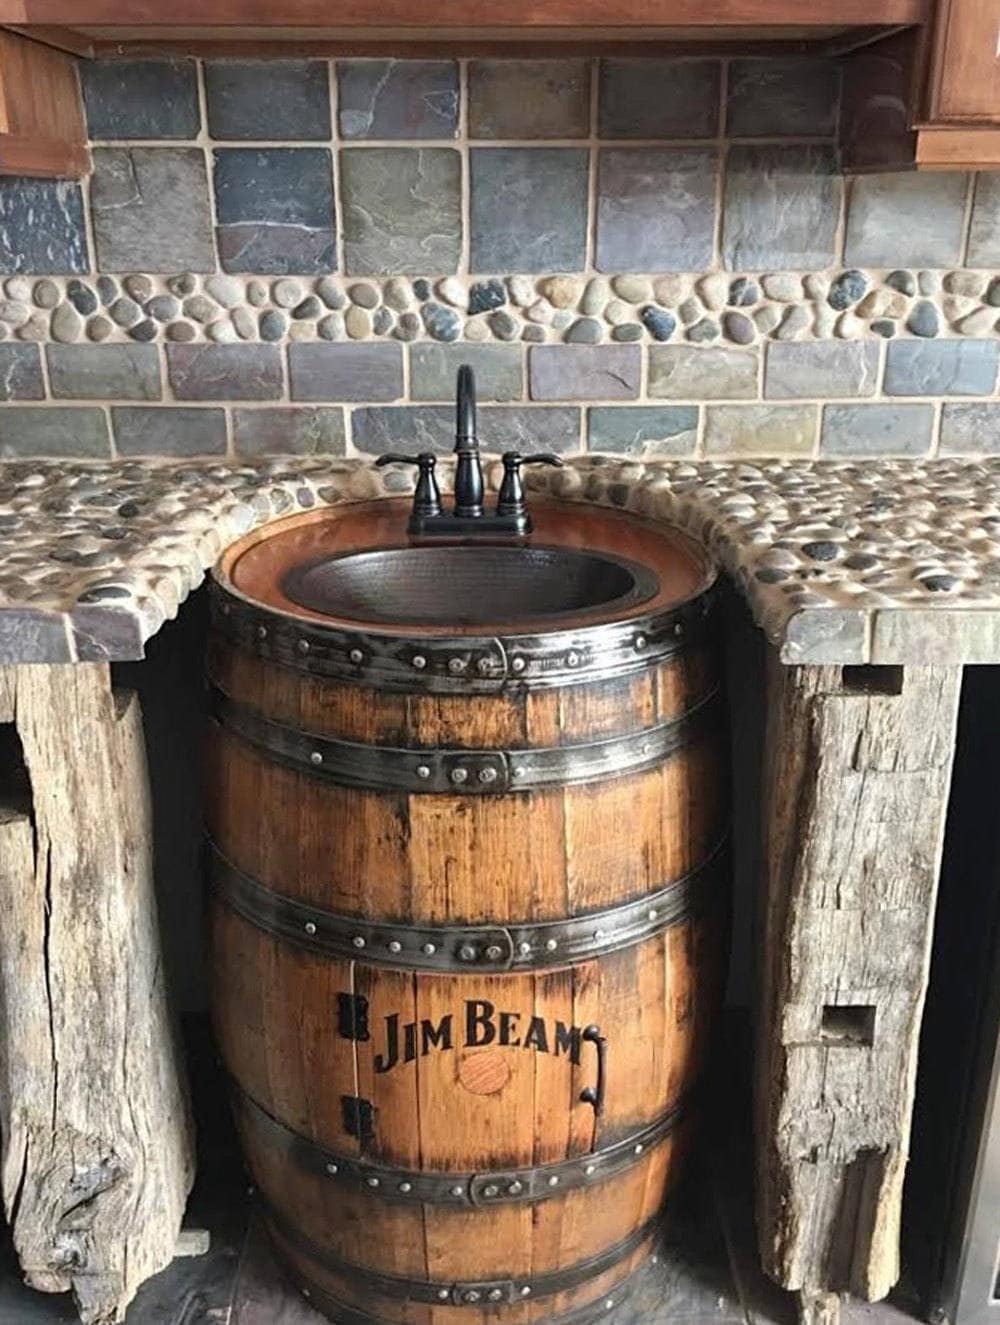 Whiskey barrel sink, hammered copper, rustic antique bathroom / bar